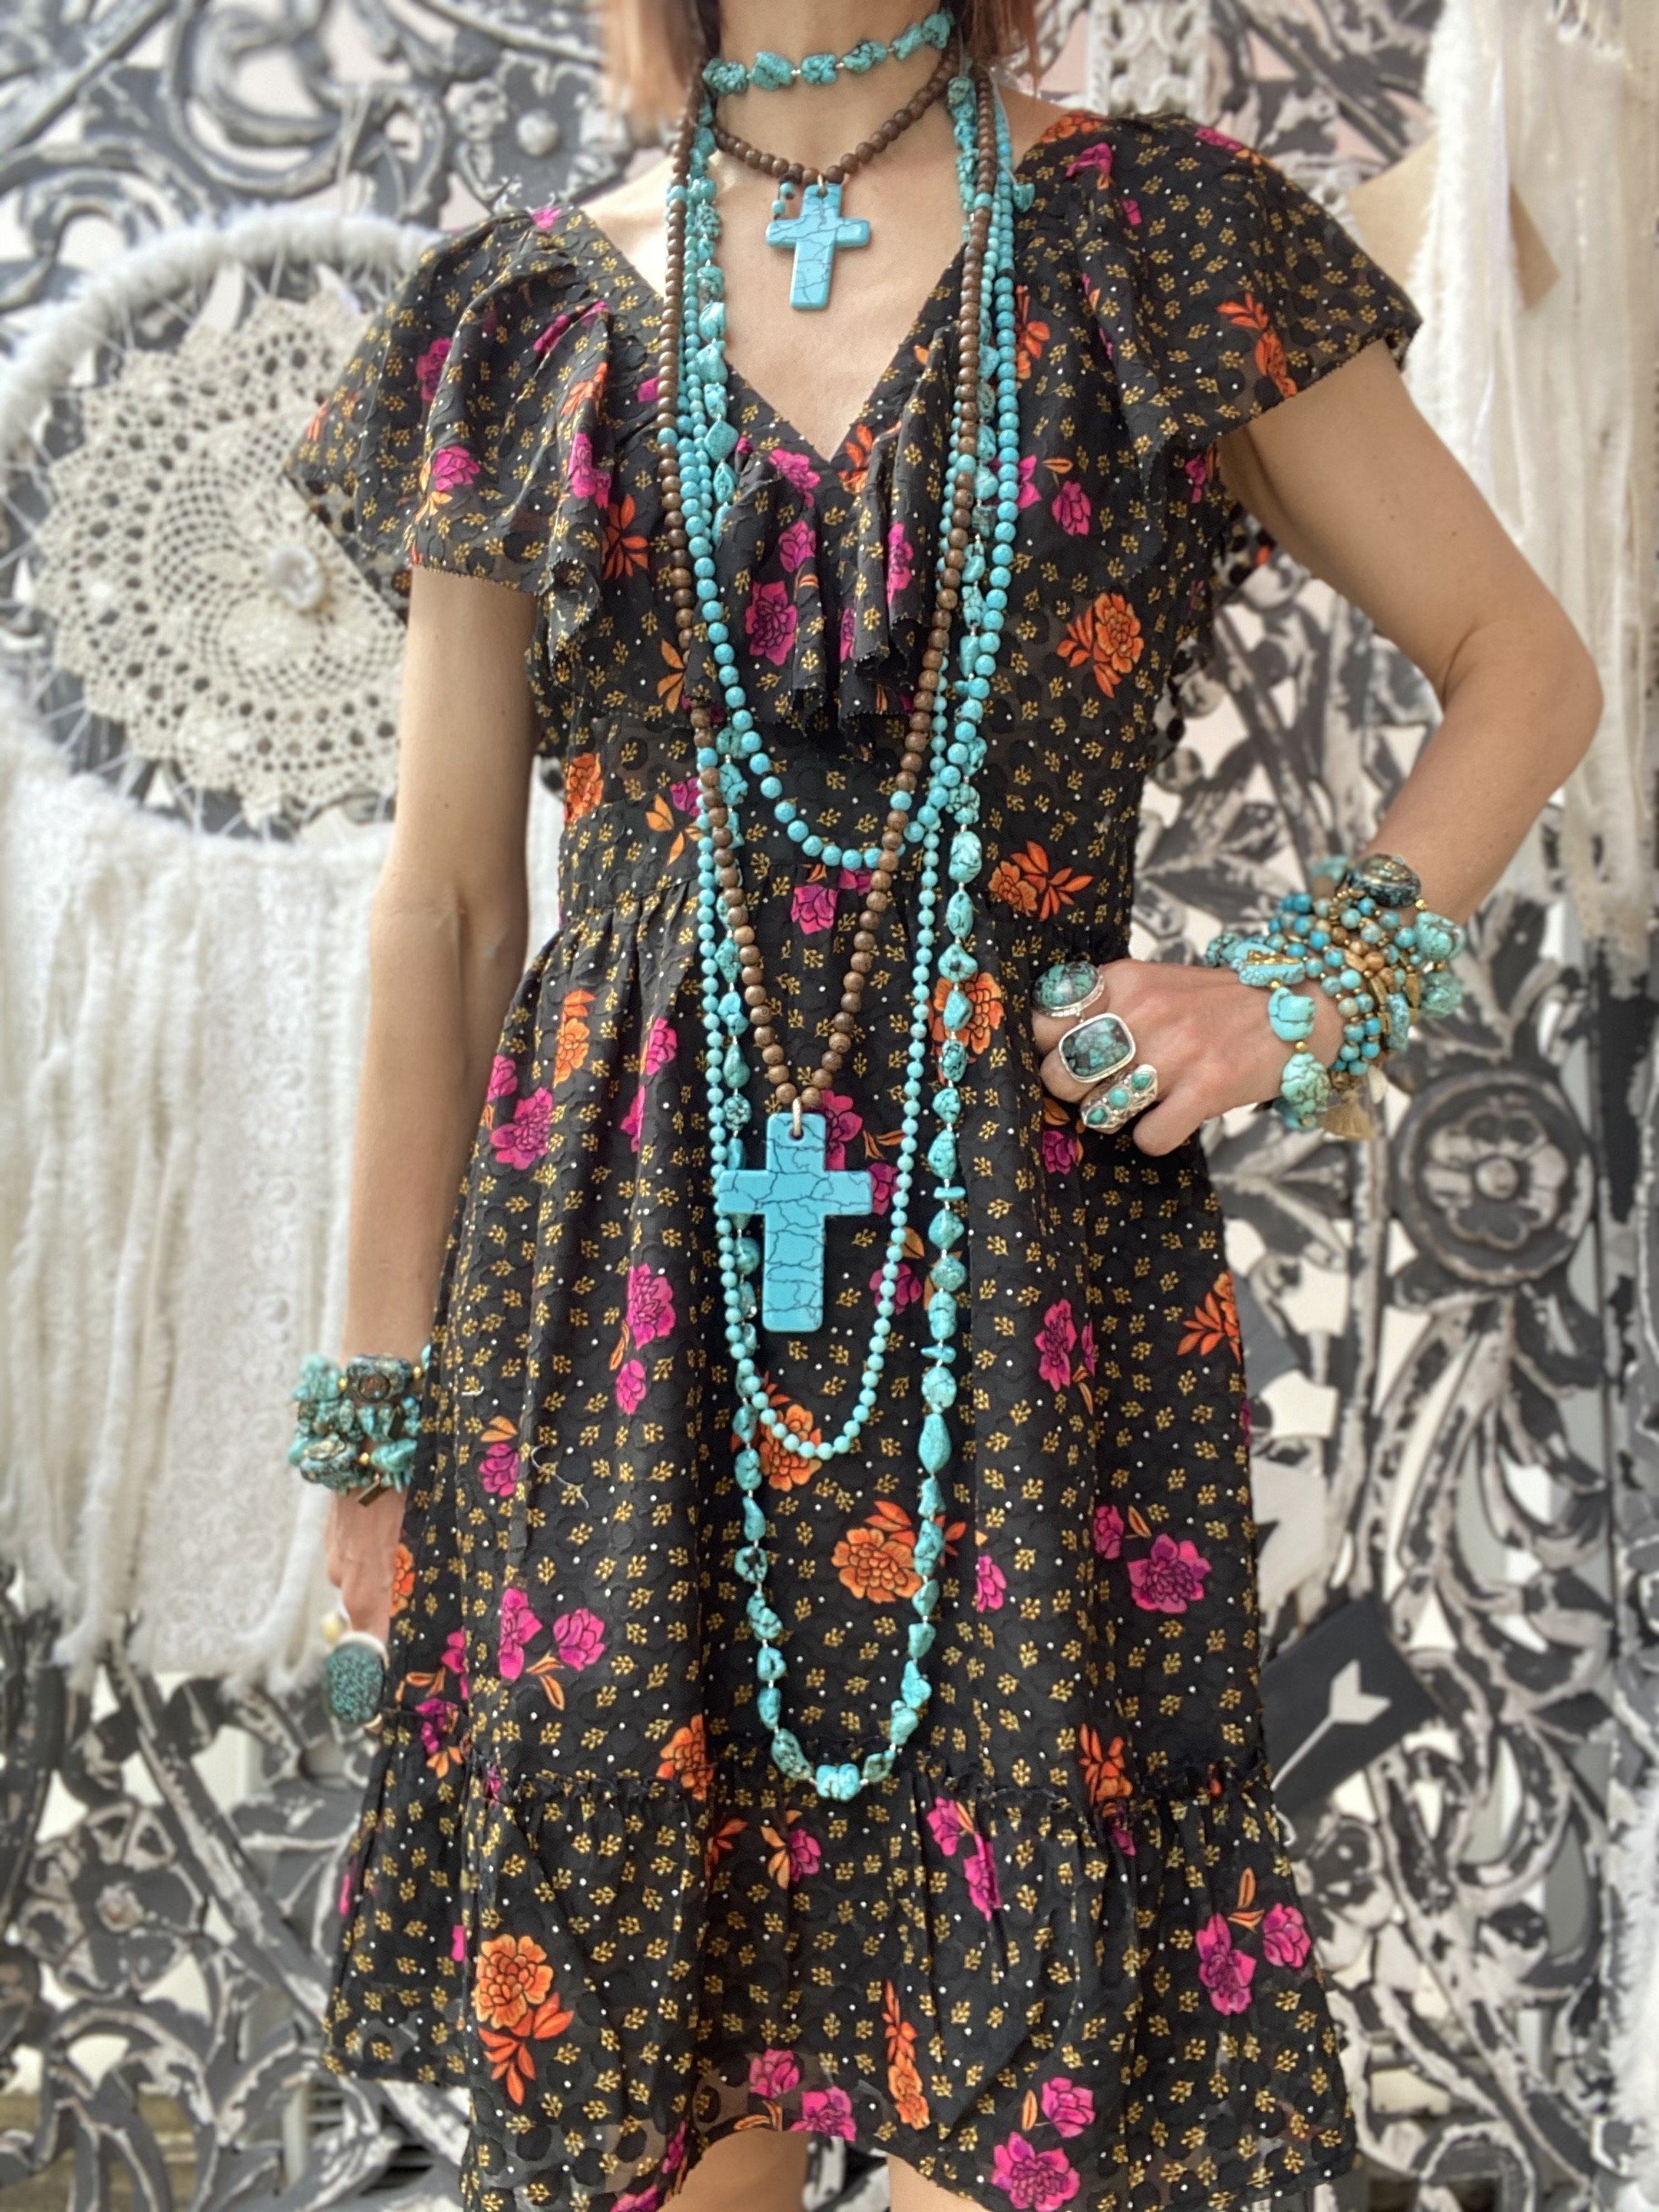 Lily Black Wild dress by Amenapih